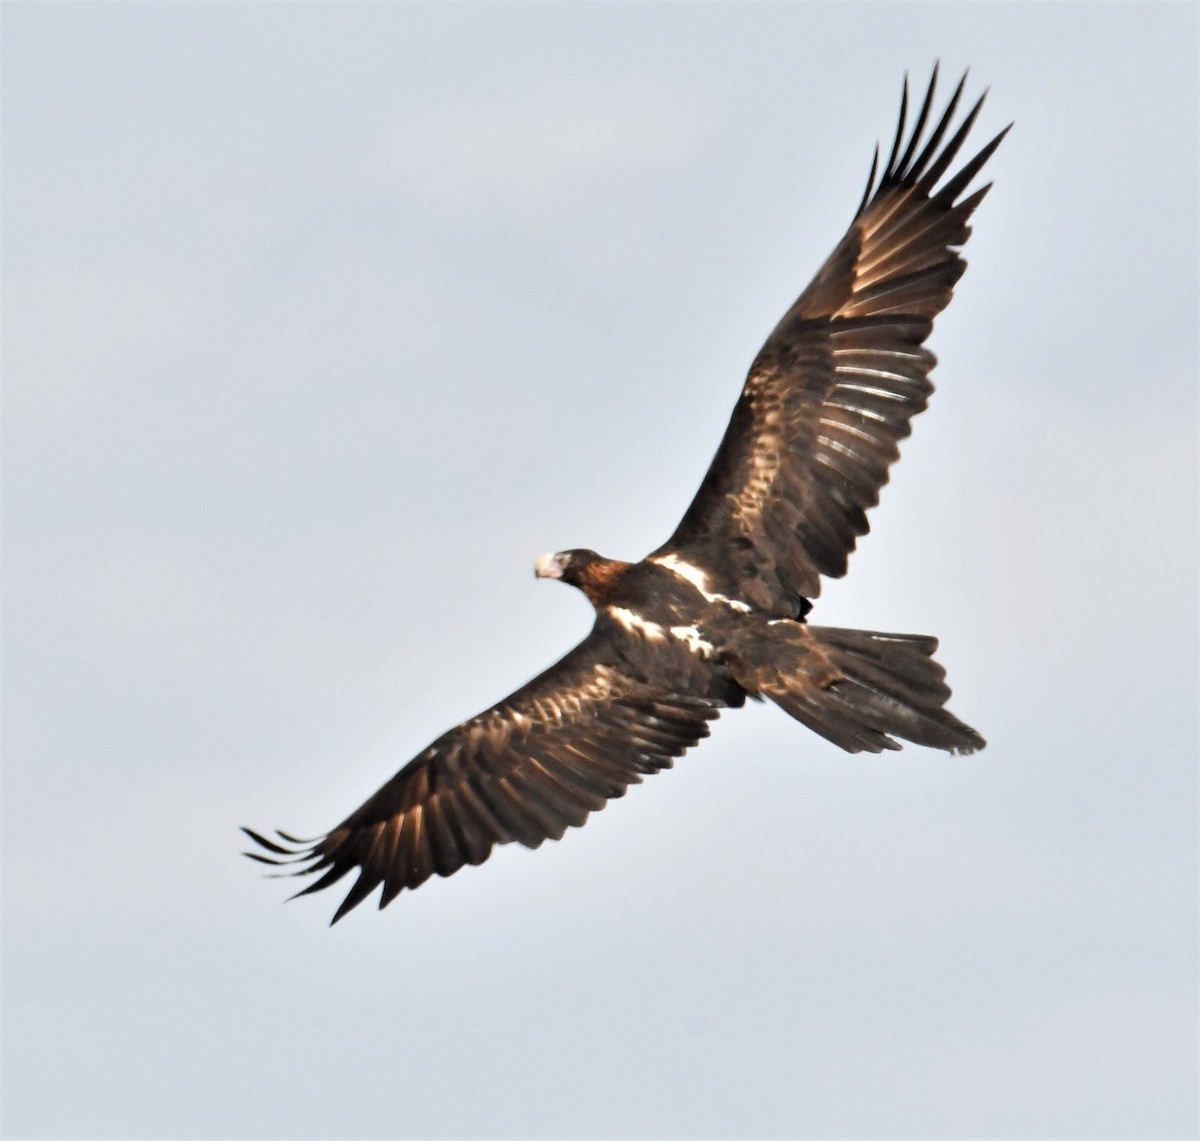 Wedge-tailed Eagle - Nicholas Talbot